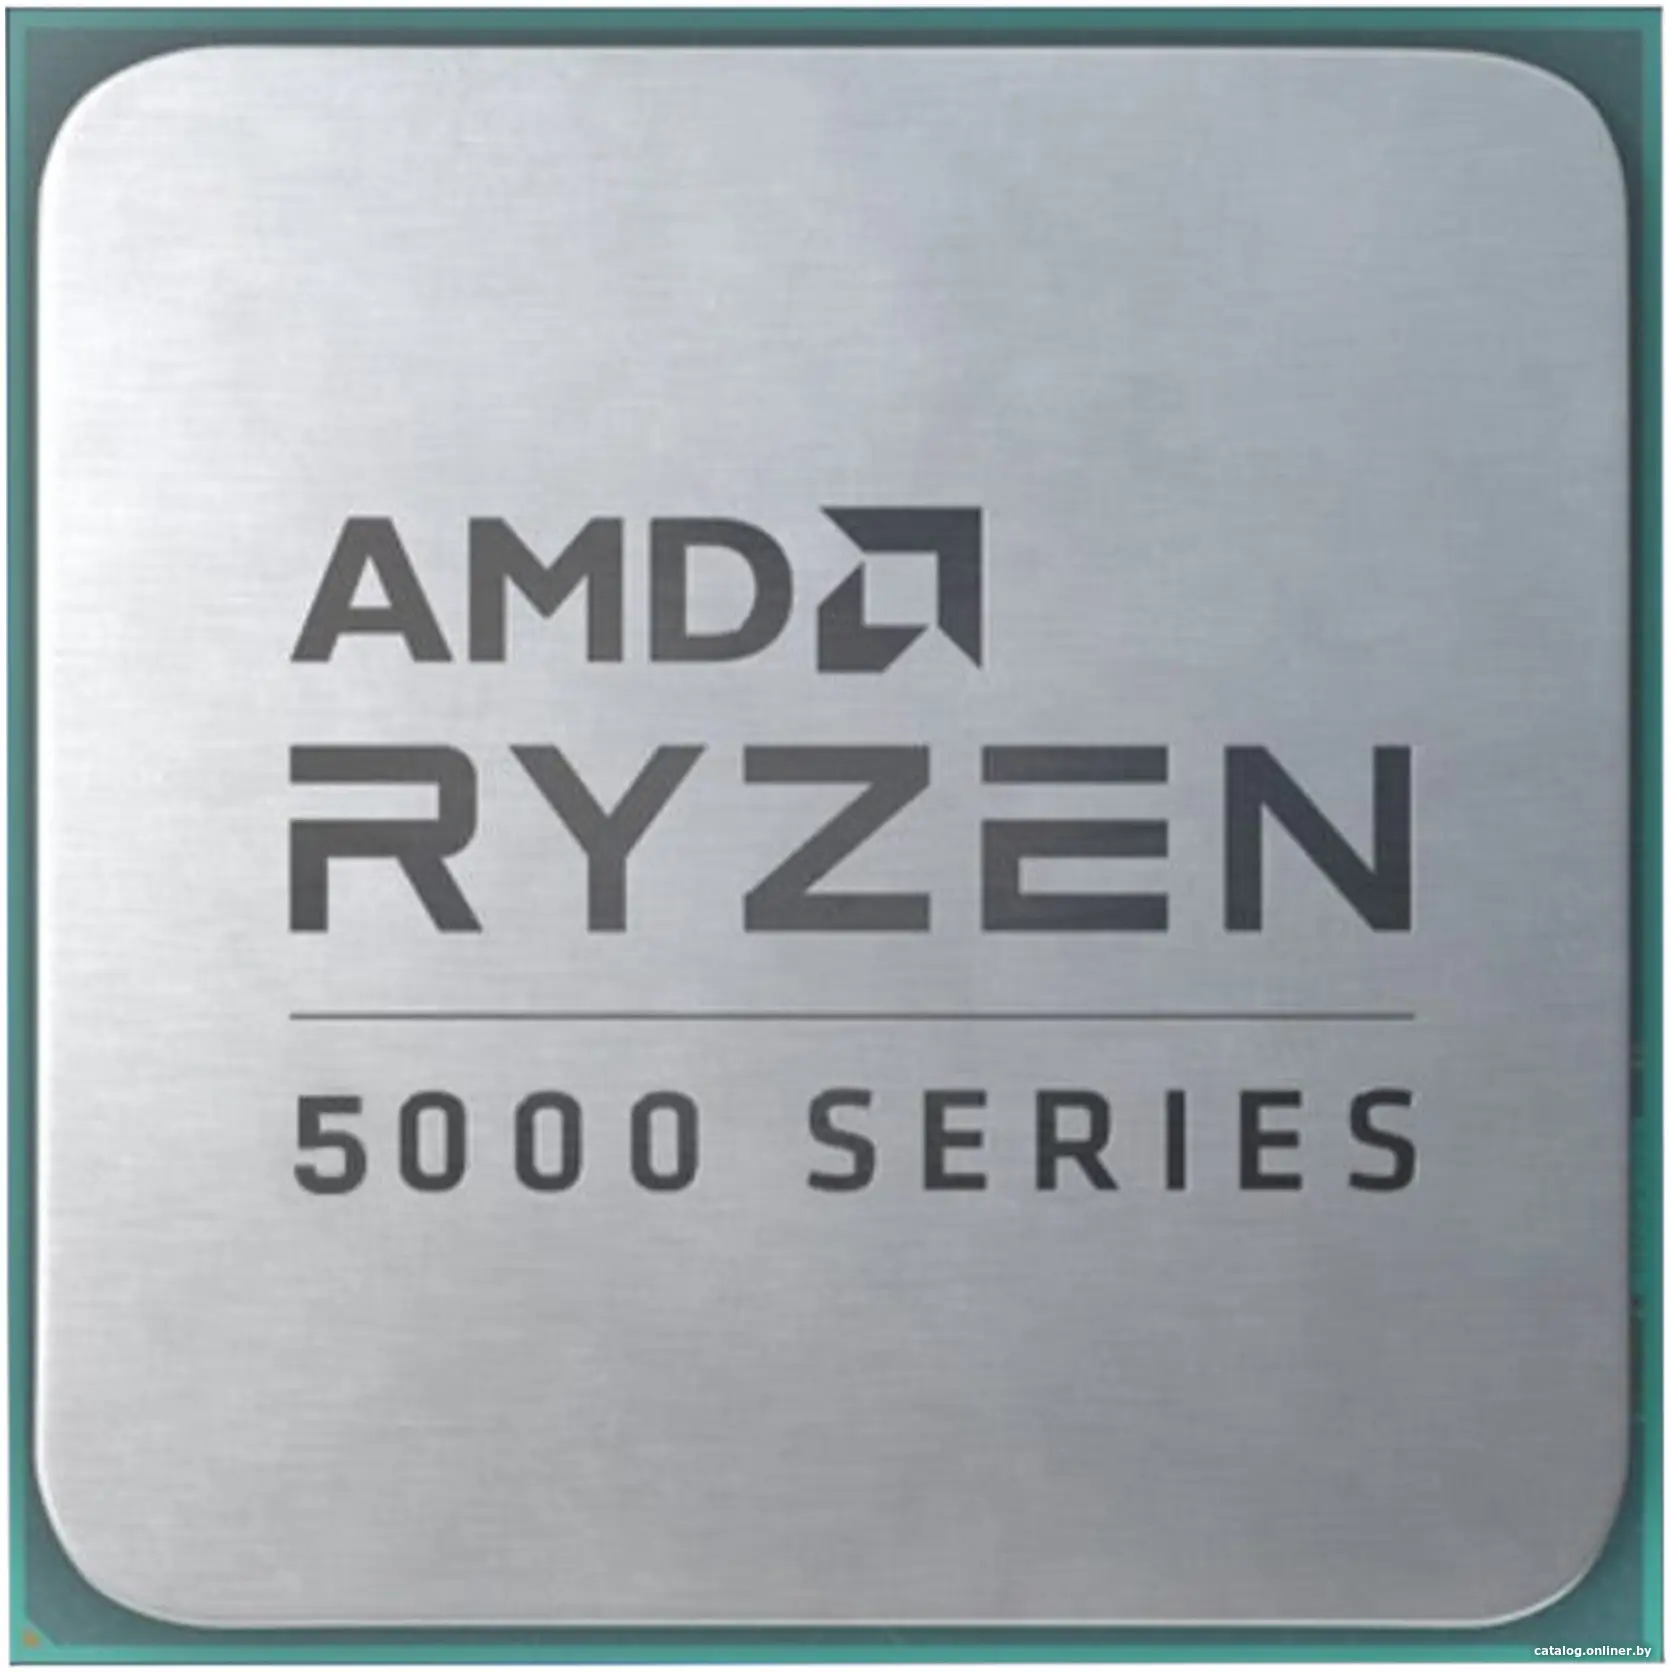 Купить Процессор AMD Ryzen 5 5600GT Box, цена, опт и розница